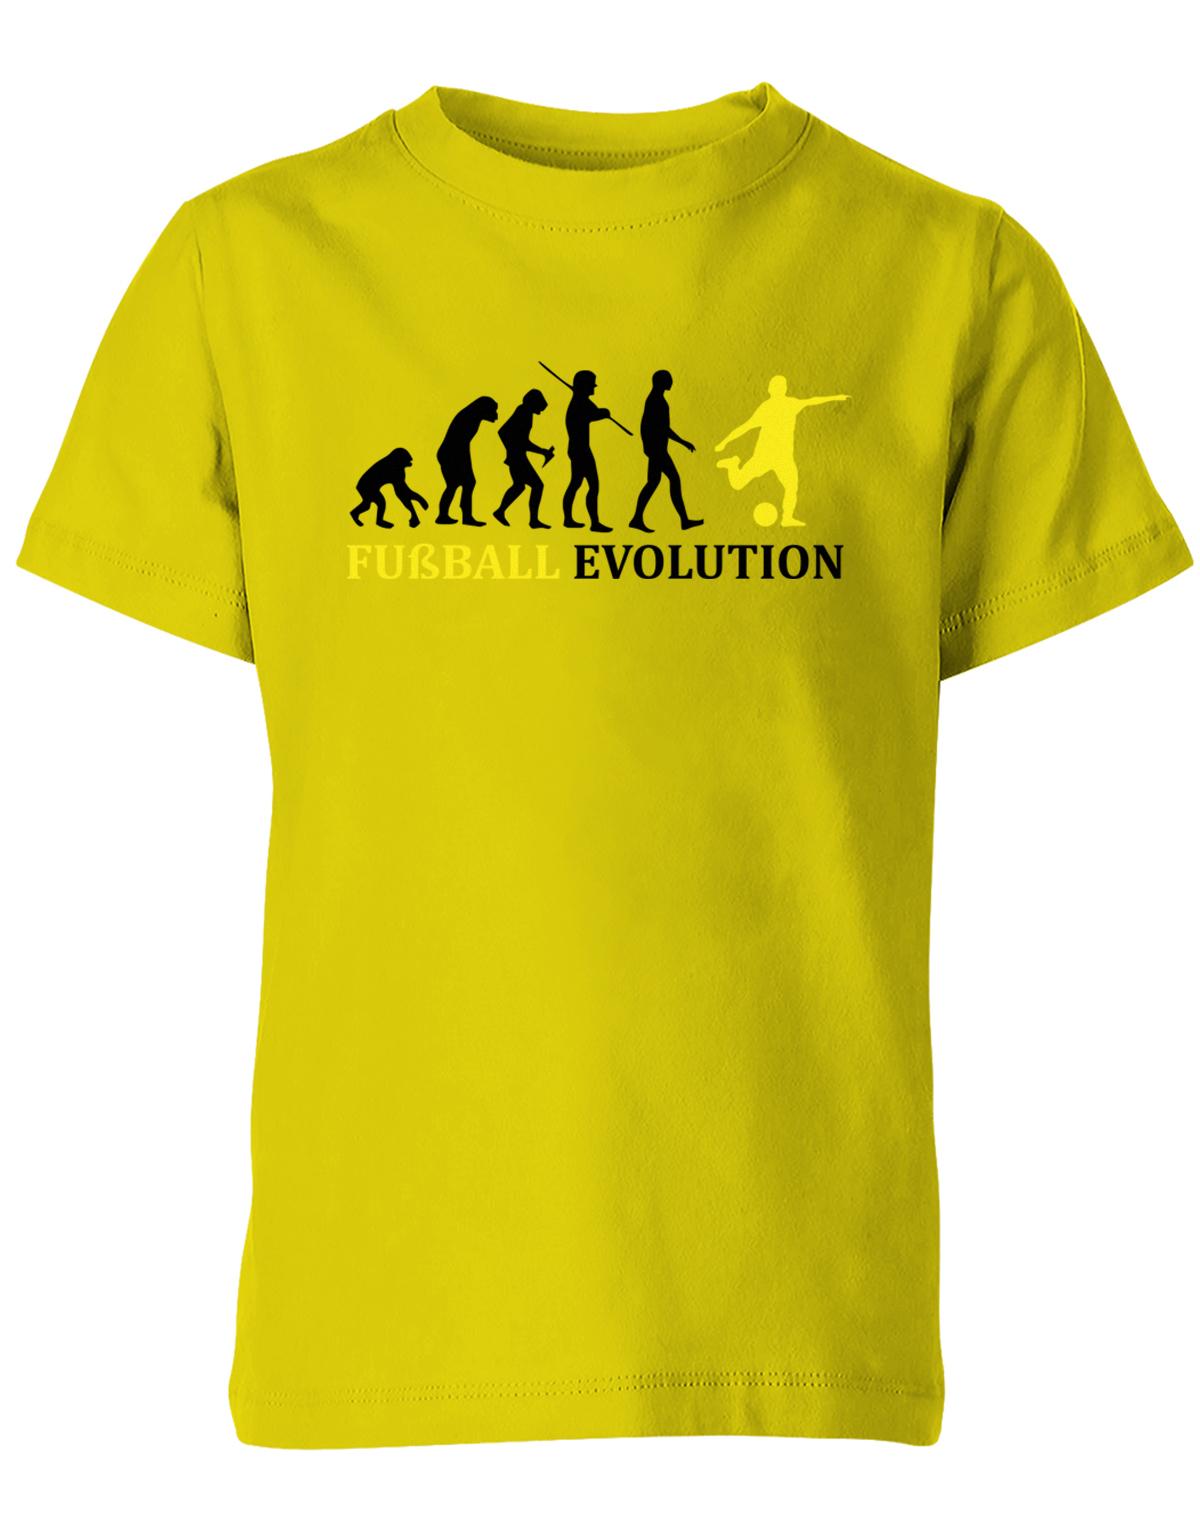 Fussball-Evolution-Kinder-Shirt-Gelb-Gelb